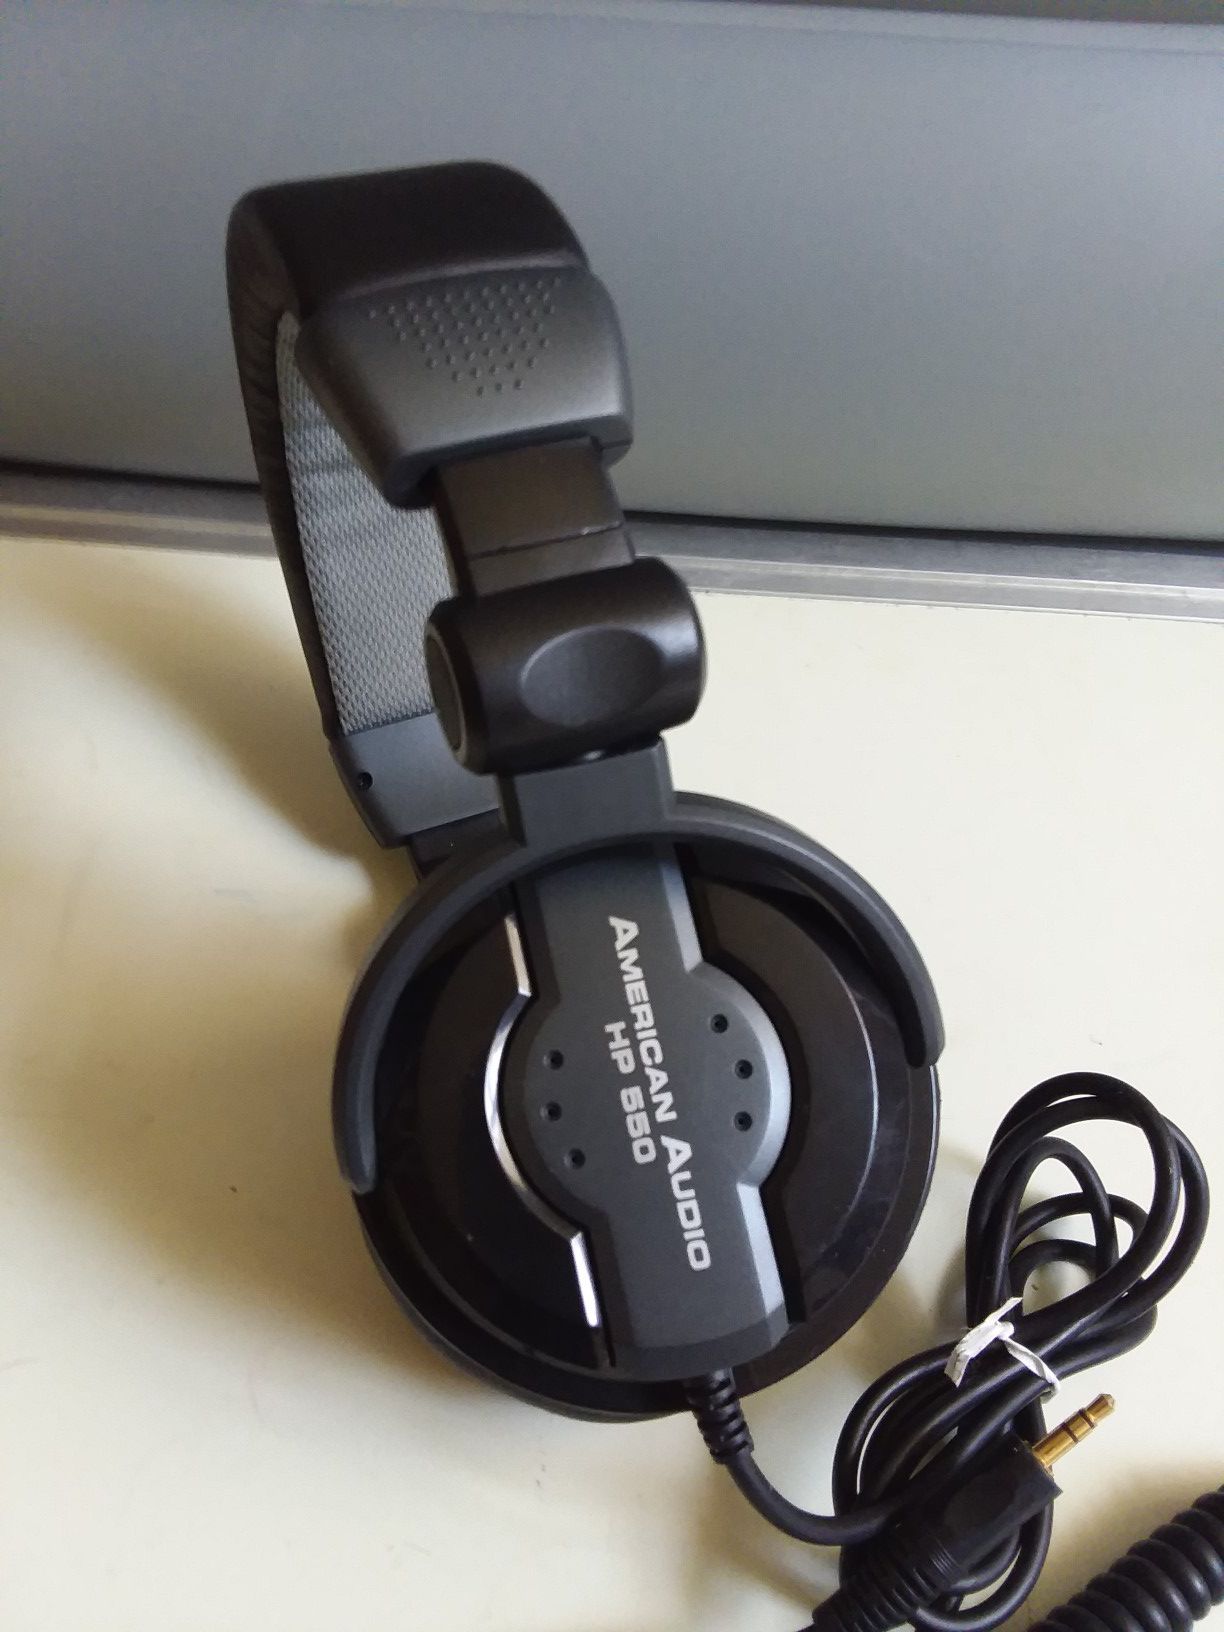 American Audio HP 550 Professional DJ Headphones.